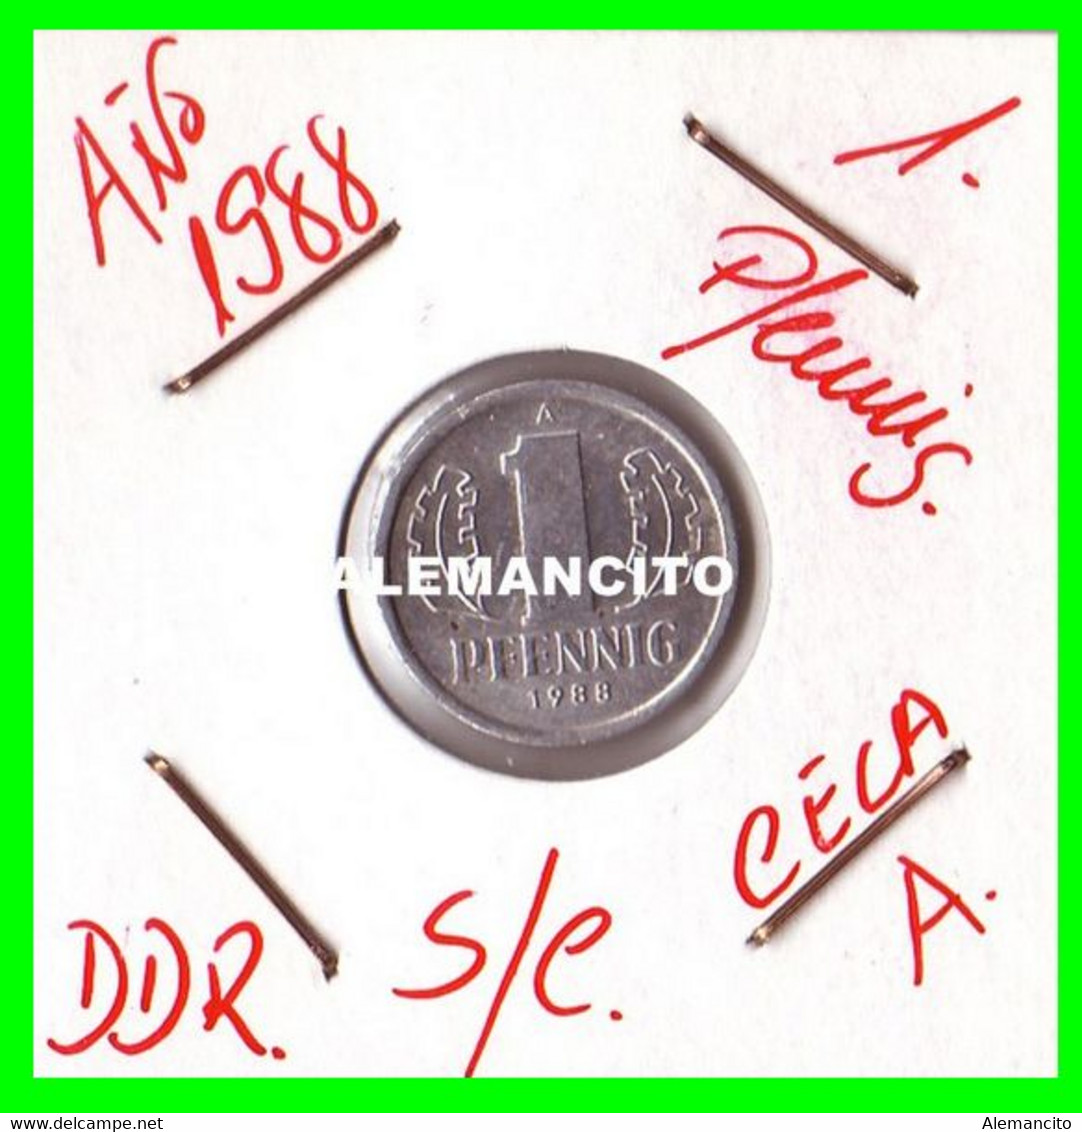 REPUBLICA DEMOCRATICA DE ALEMANIA ( DDR ) MONEDAS DE 1 PFENNING AÑO 1988 CECA-A MONEDA DE 17mm Obv.State ALUMINIO S/C - 1 Pfennig